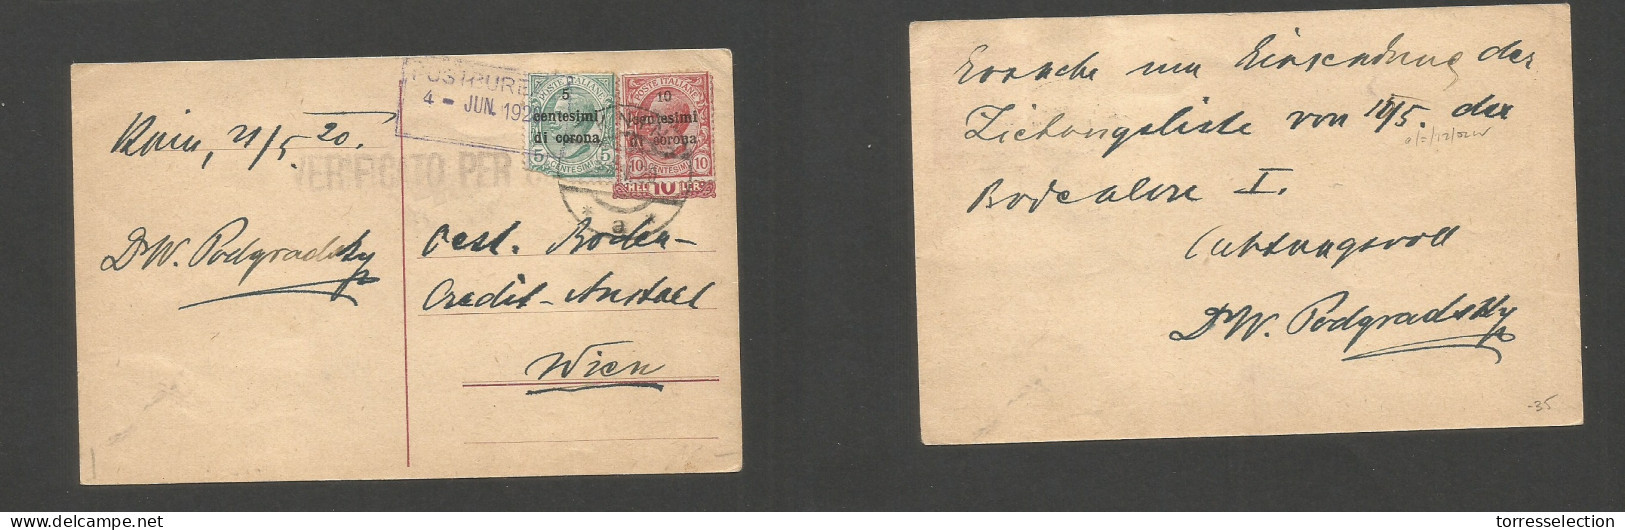 ITALY. 1920 (21 May) Venezia. Ovptd Issue. Knih - Austria, Wien. Censor Multifkd Ppc. Former Austria Stat Card. SALE. - Zonder Classificatie